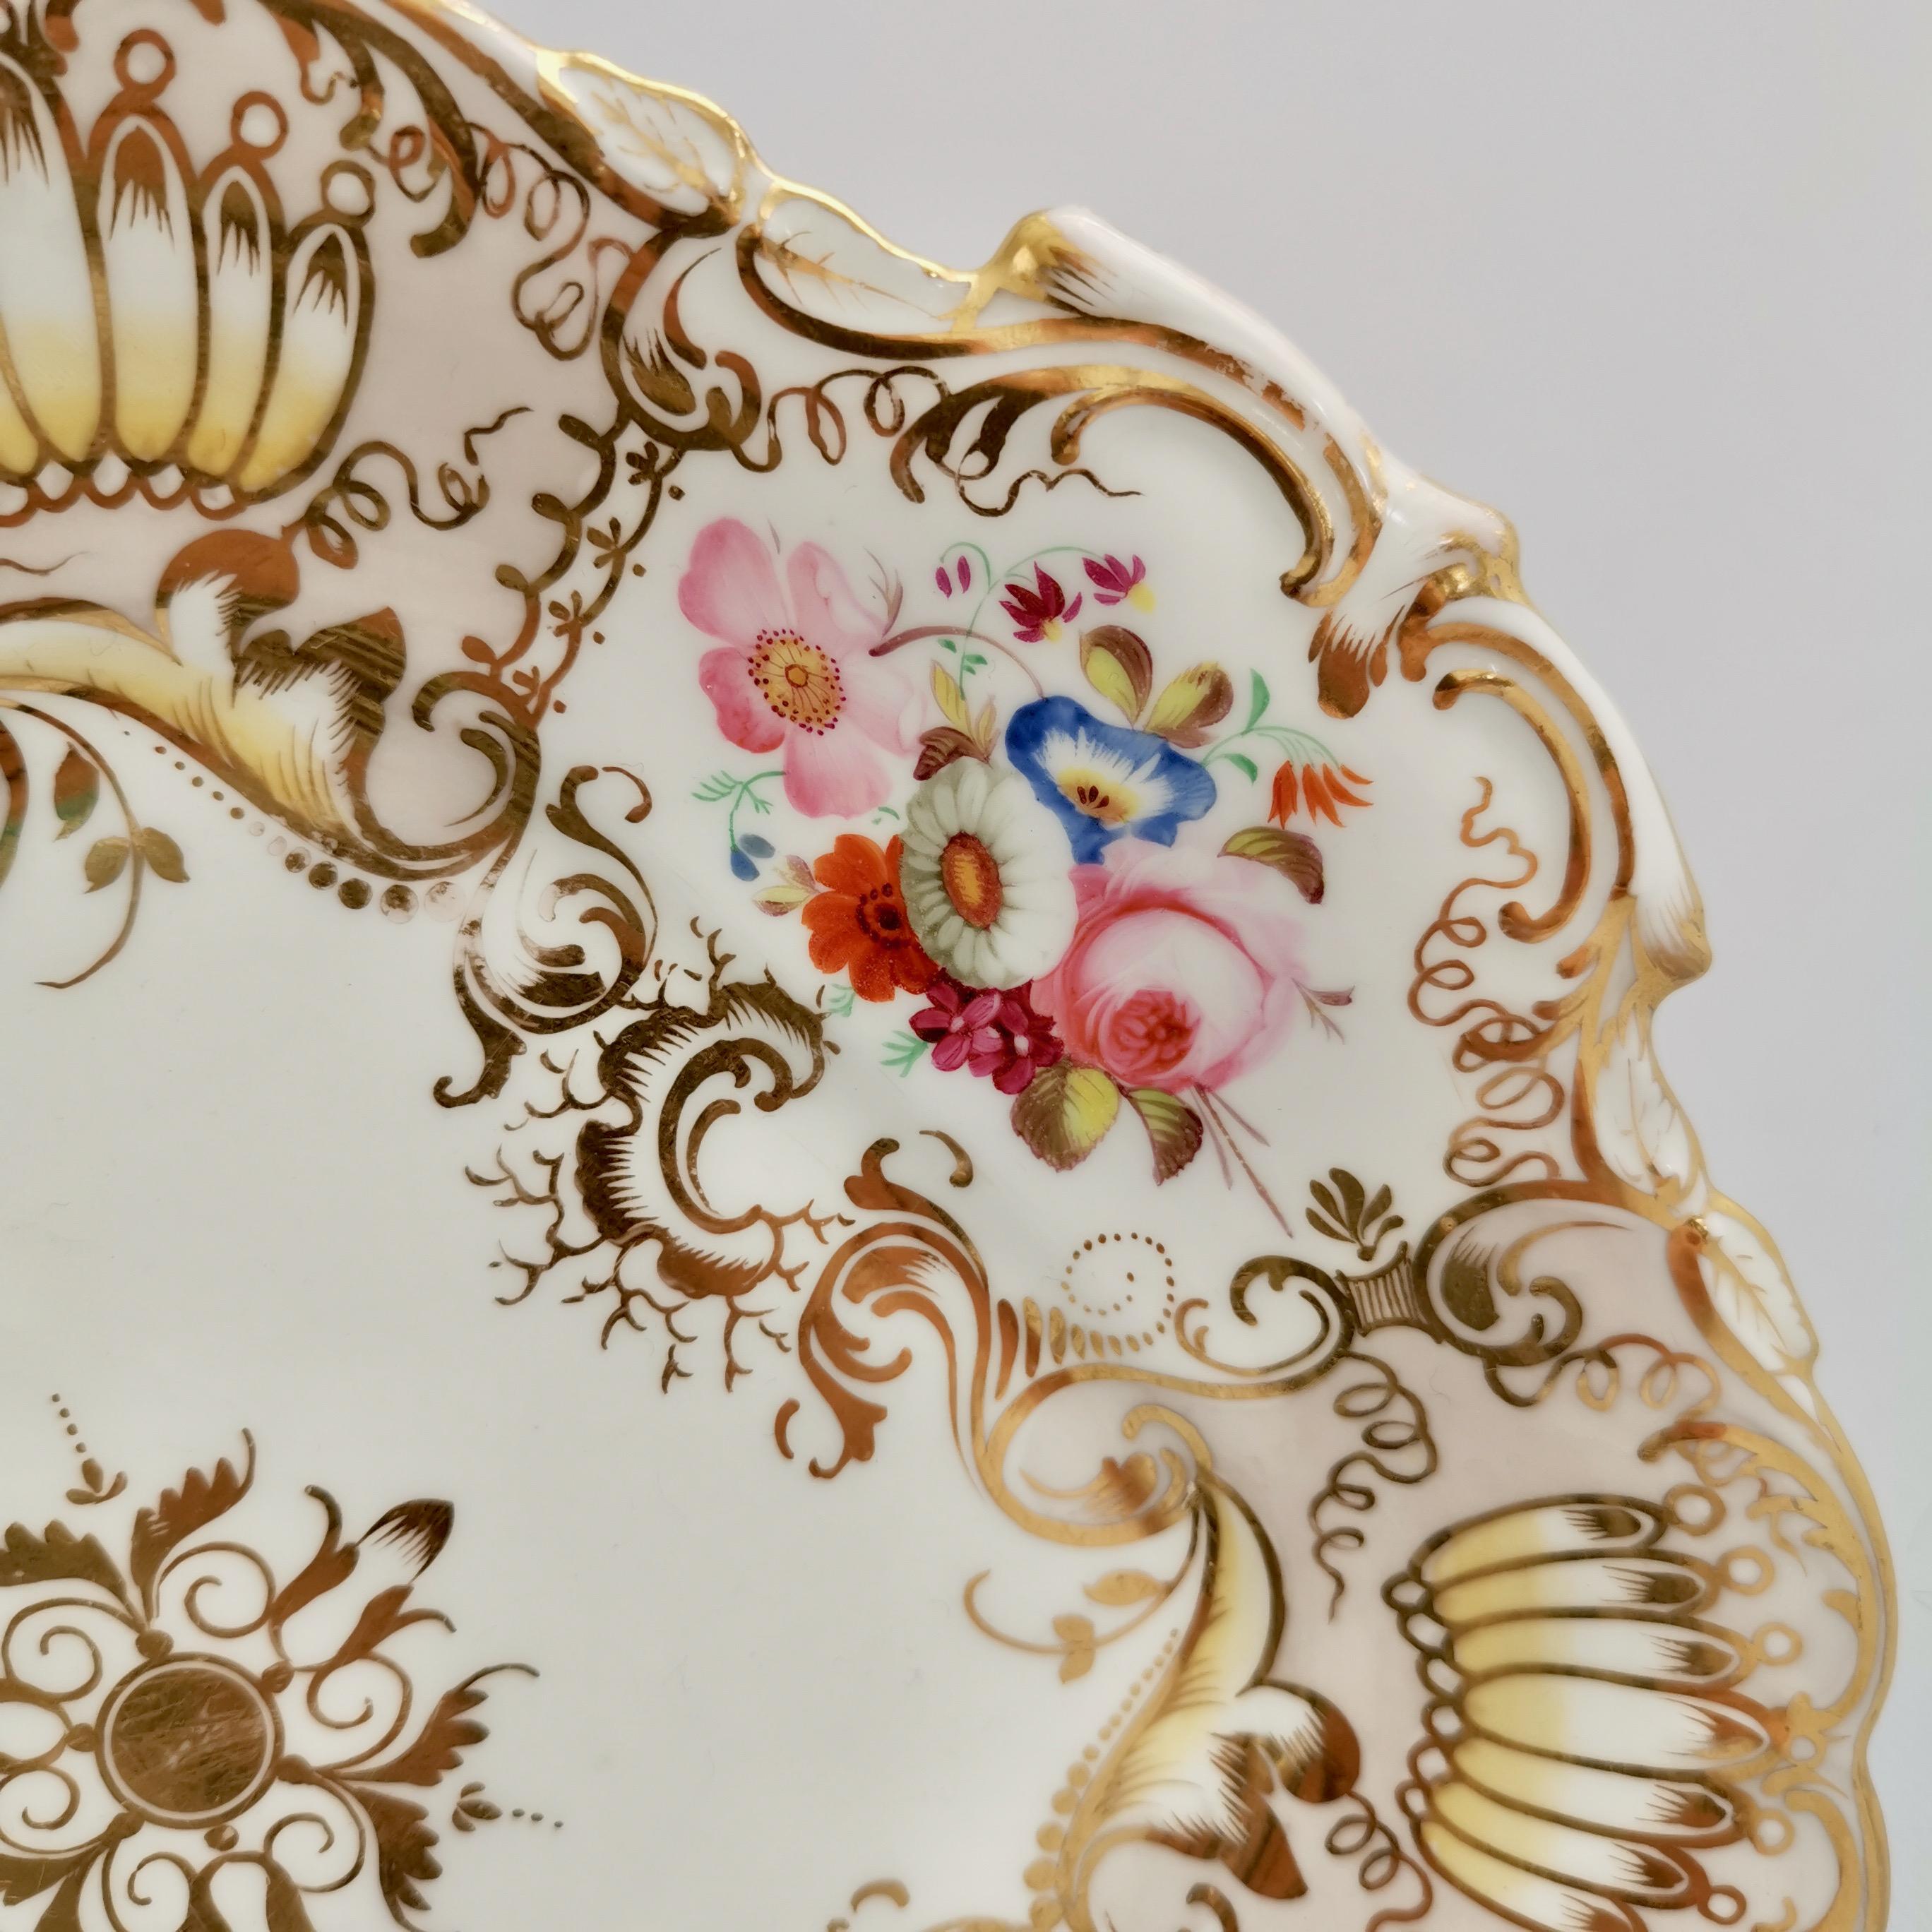 Mid-19th Century Coalport Porcelain Cake Plate, Gilt, Flowers Attr. T. Dixon, Rococo Revival 1834